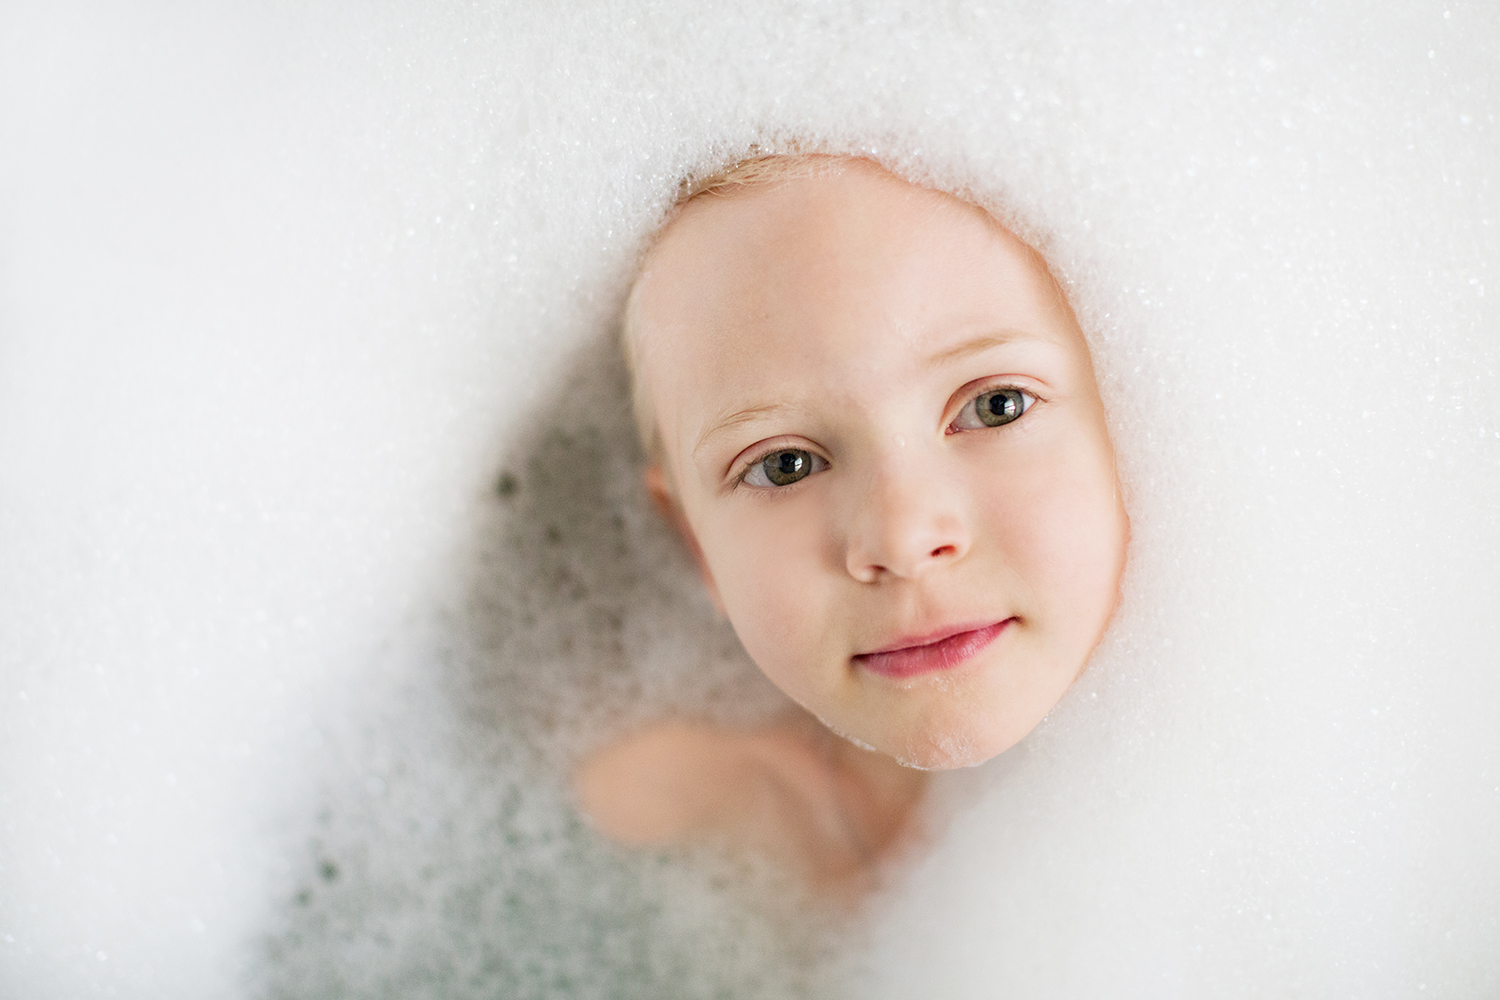 Face of a child amongst the bubbles by Dana Pugh